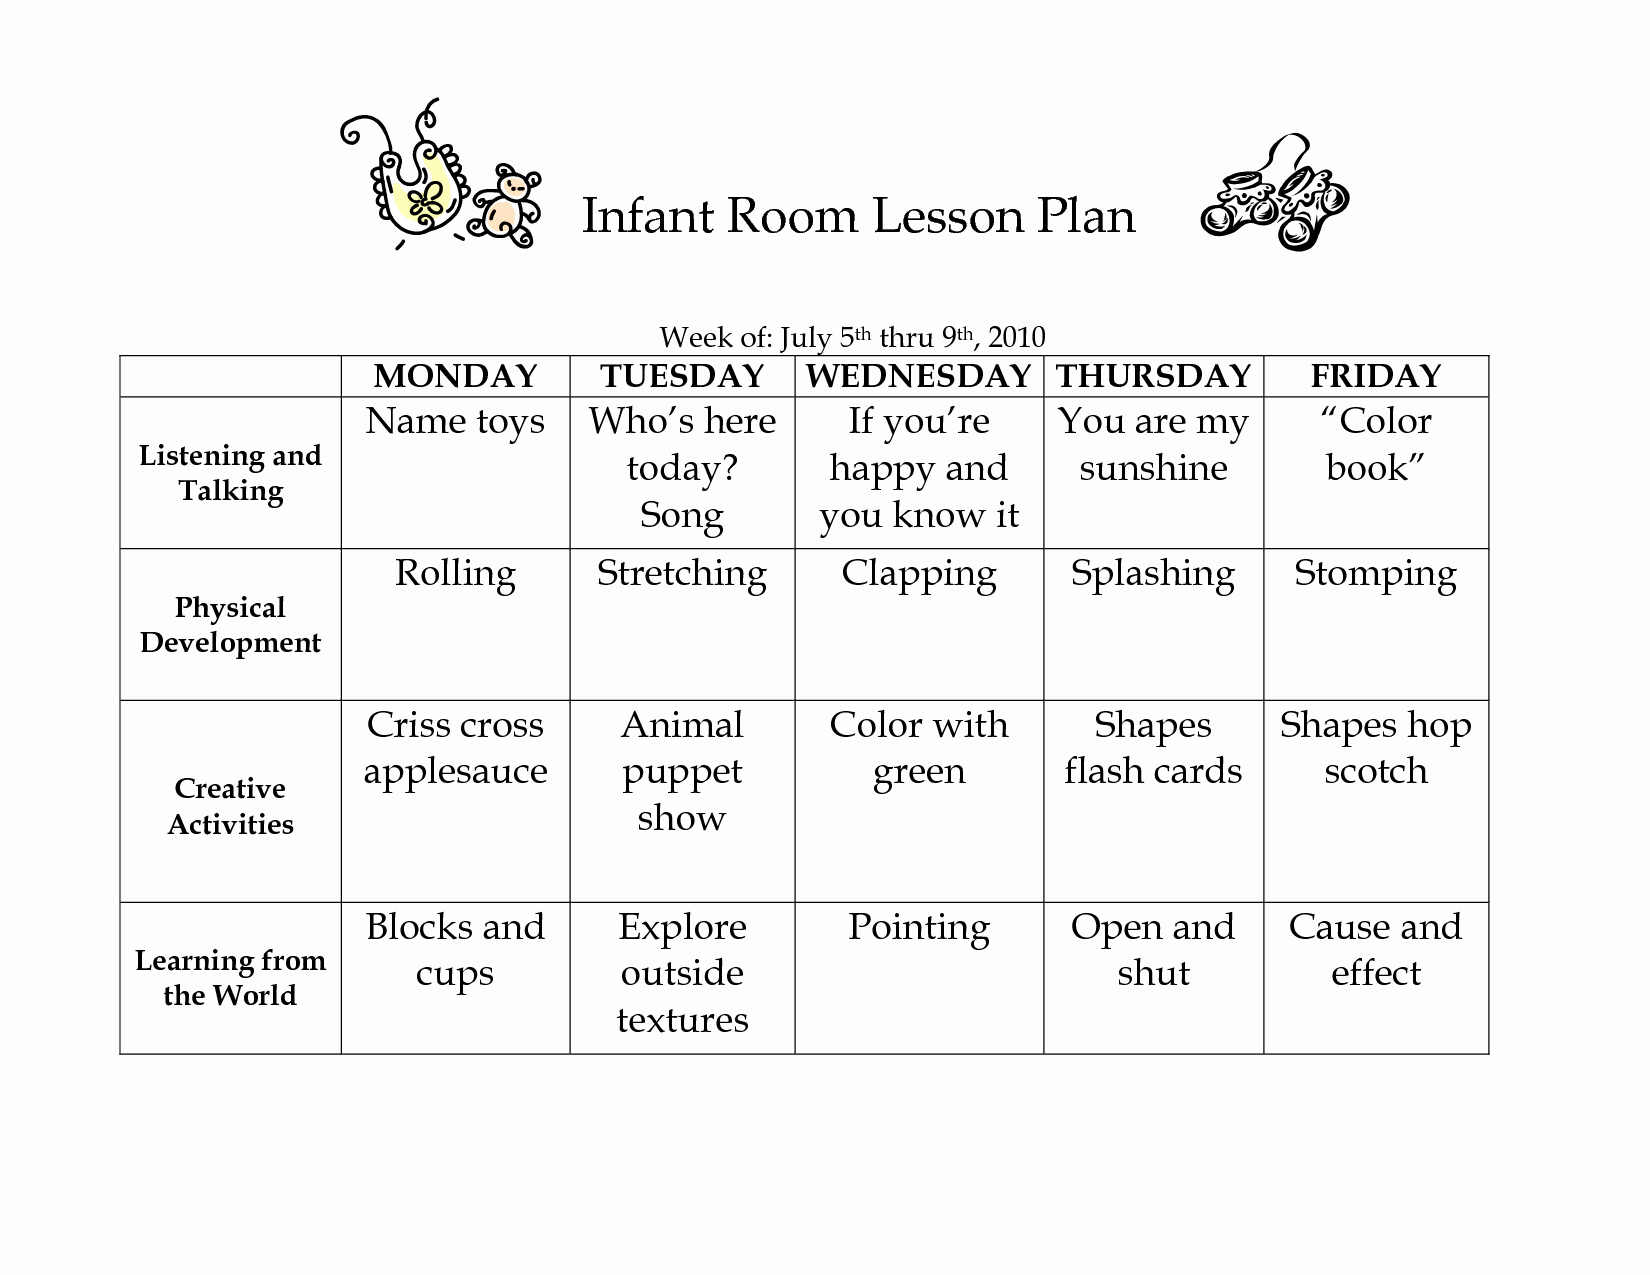 Sample Lesson Plans for toddlers Lovely Infant Room Lesson Plan Westlake Childcare by Linzhengnd